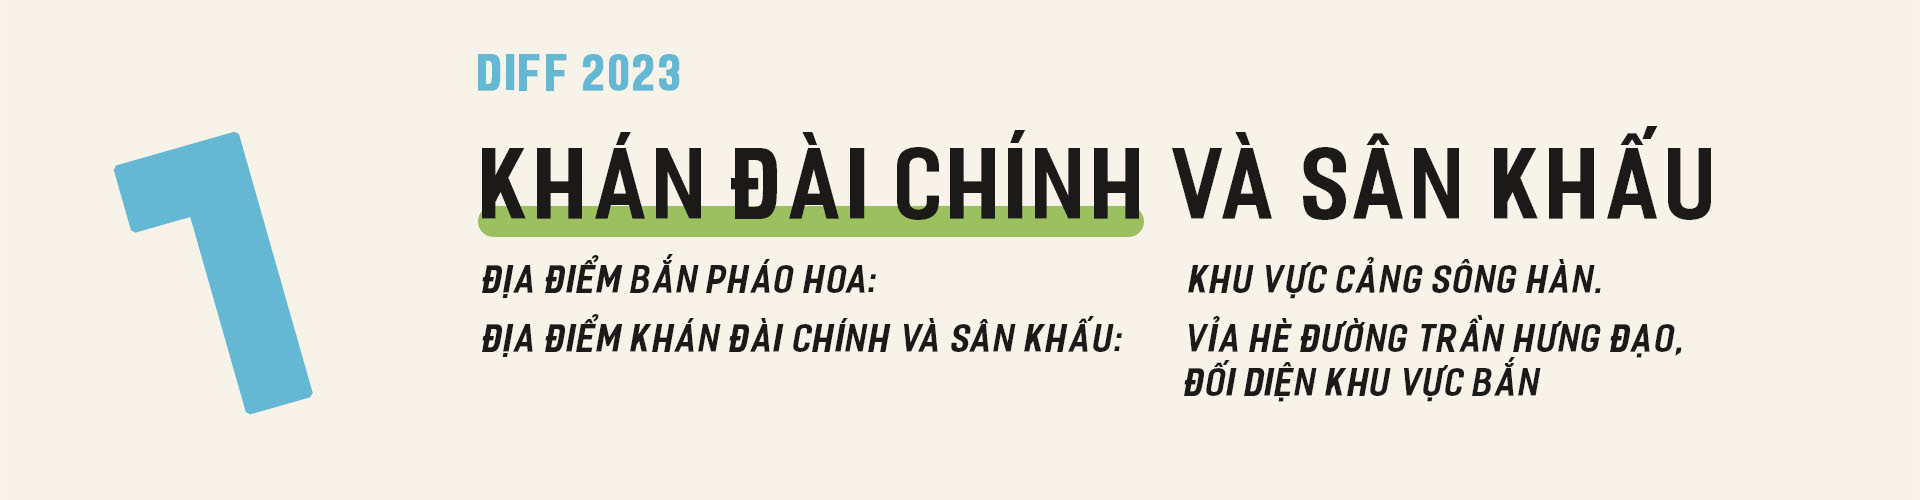 Top Cac Dia Diem Xem Phao Hoa Da Nang Diff 2023 Cuc Dinh Khan Dai Chinh Va San Khau